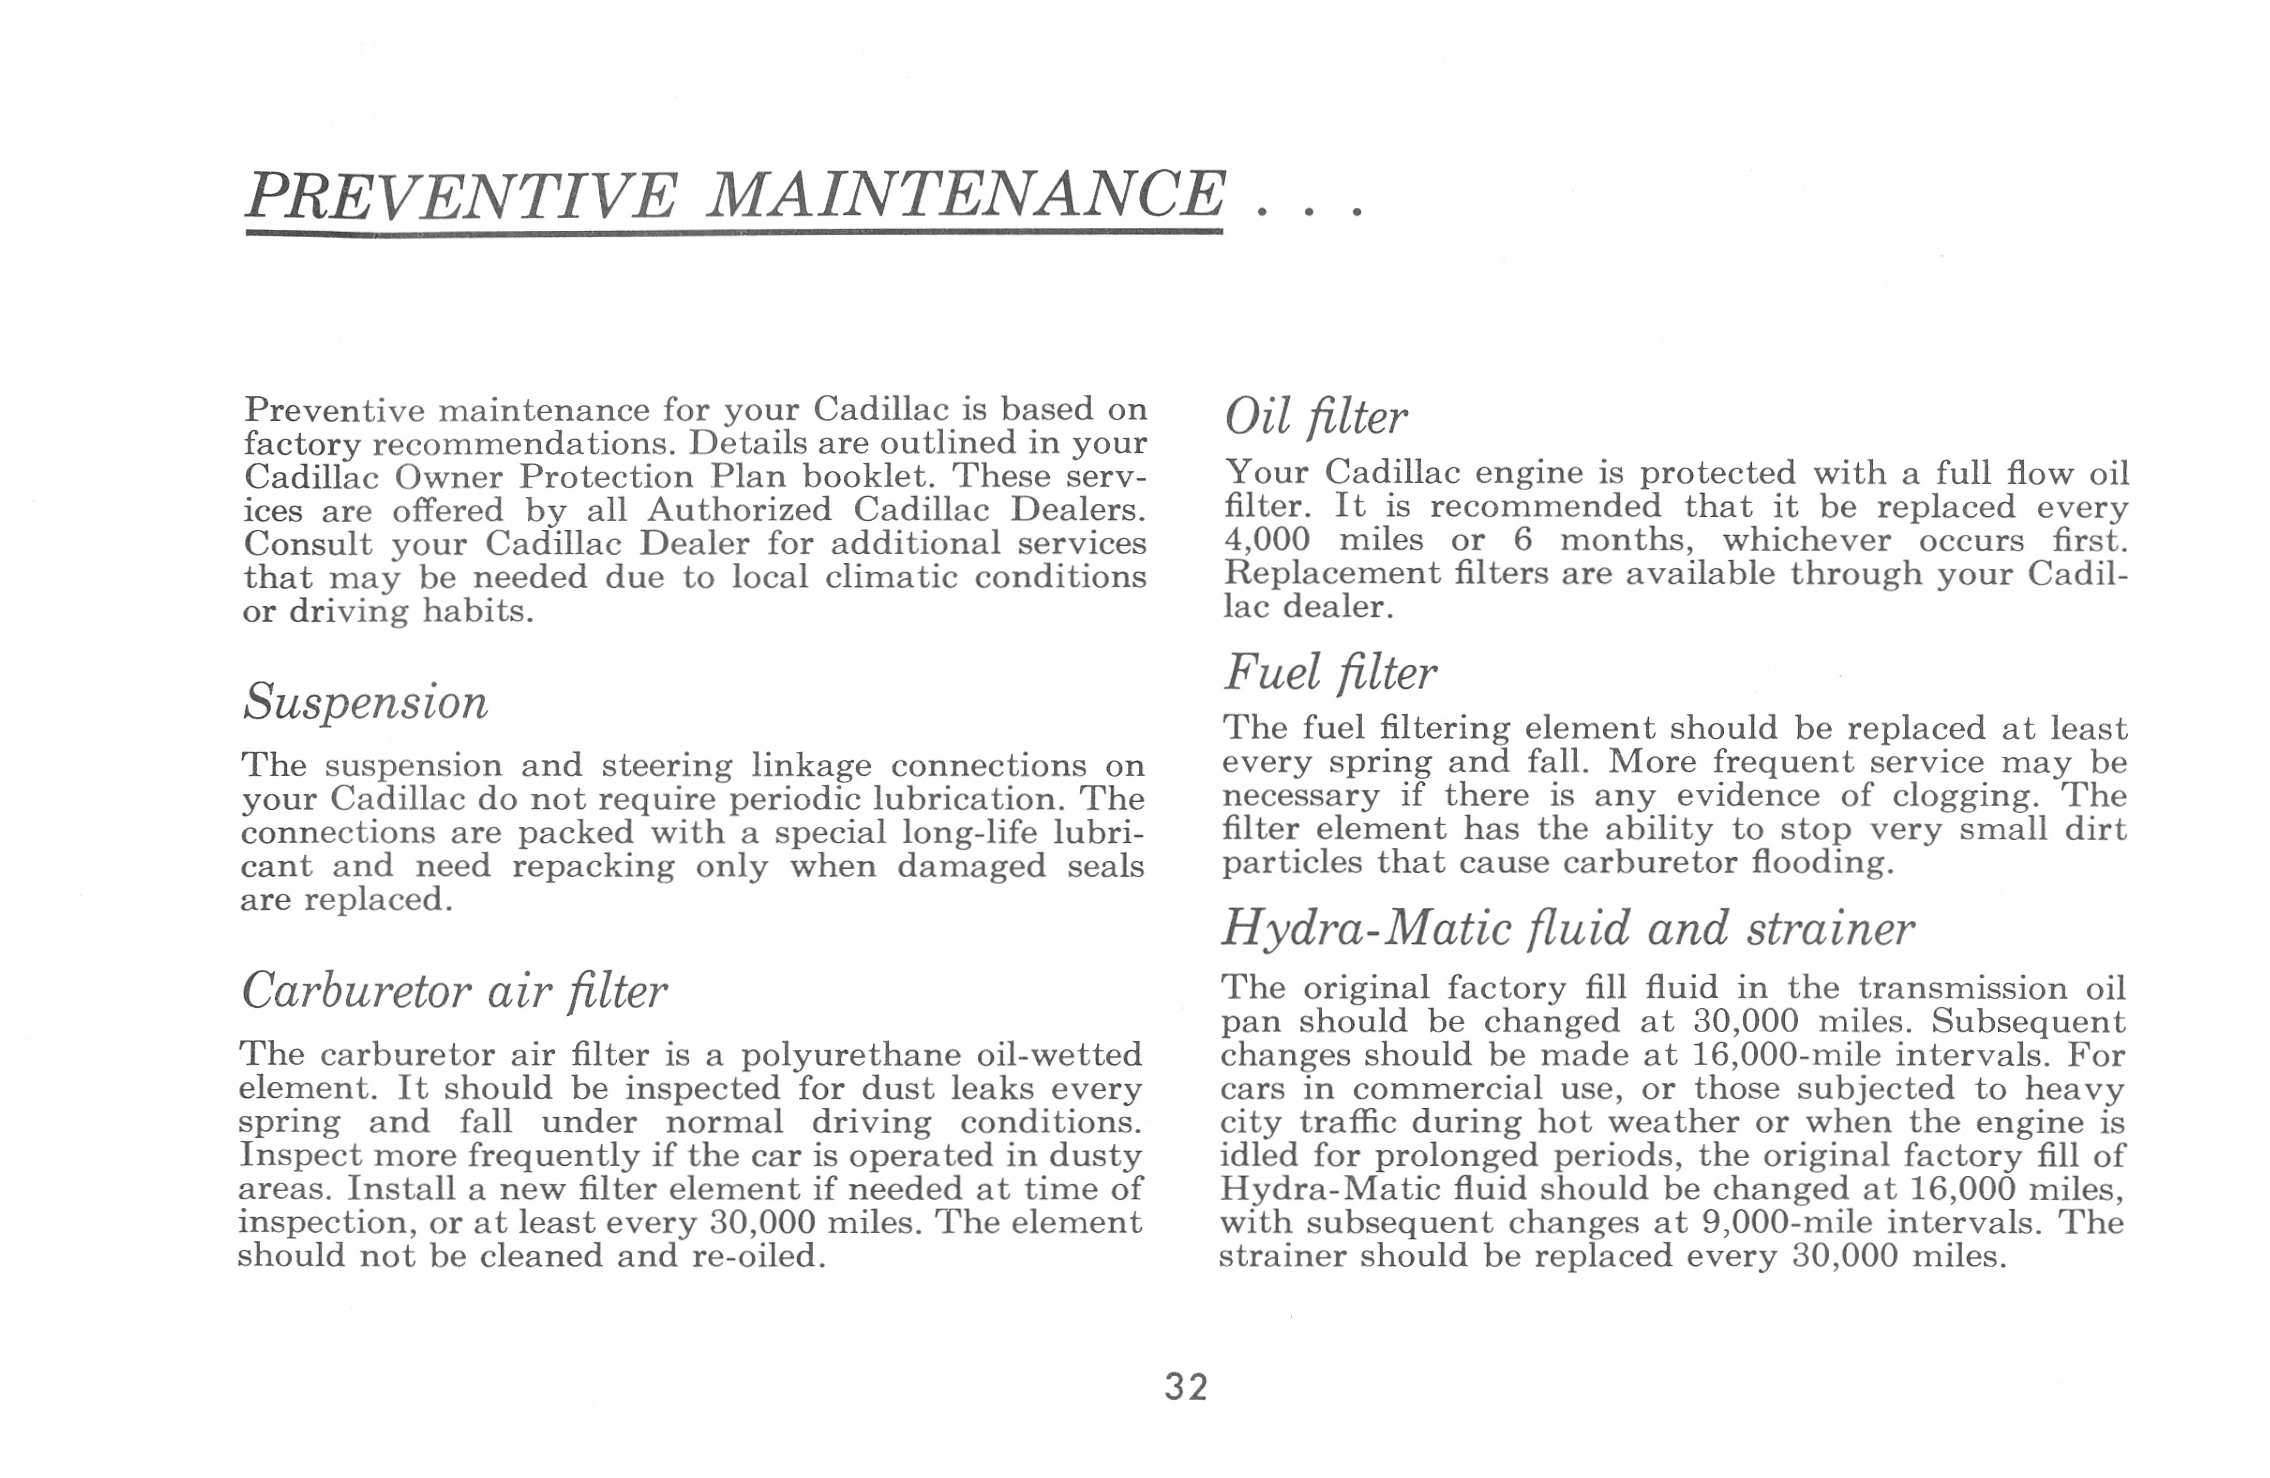 n_1962 Cadillac Owner's Manual-Page 32.jpg